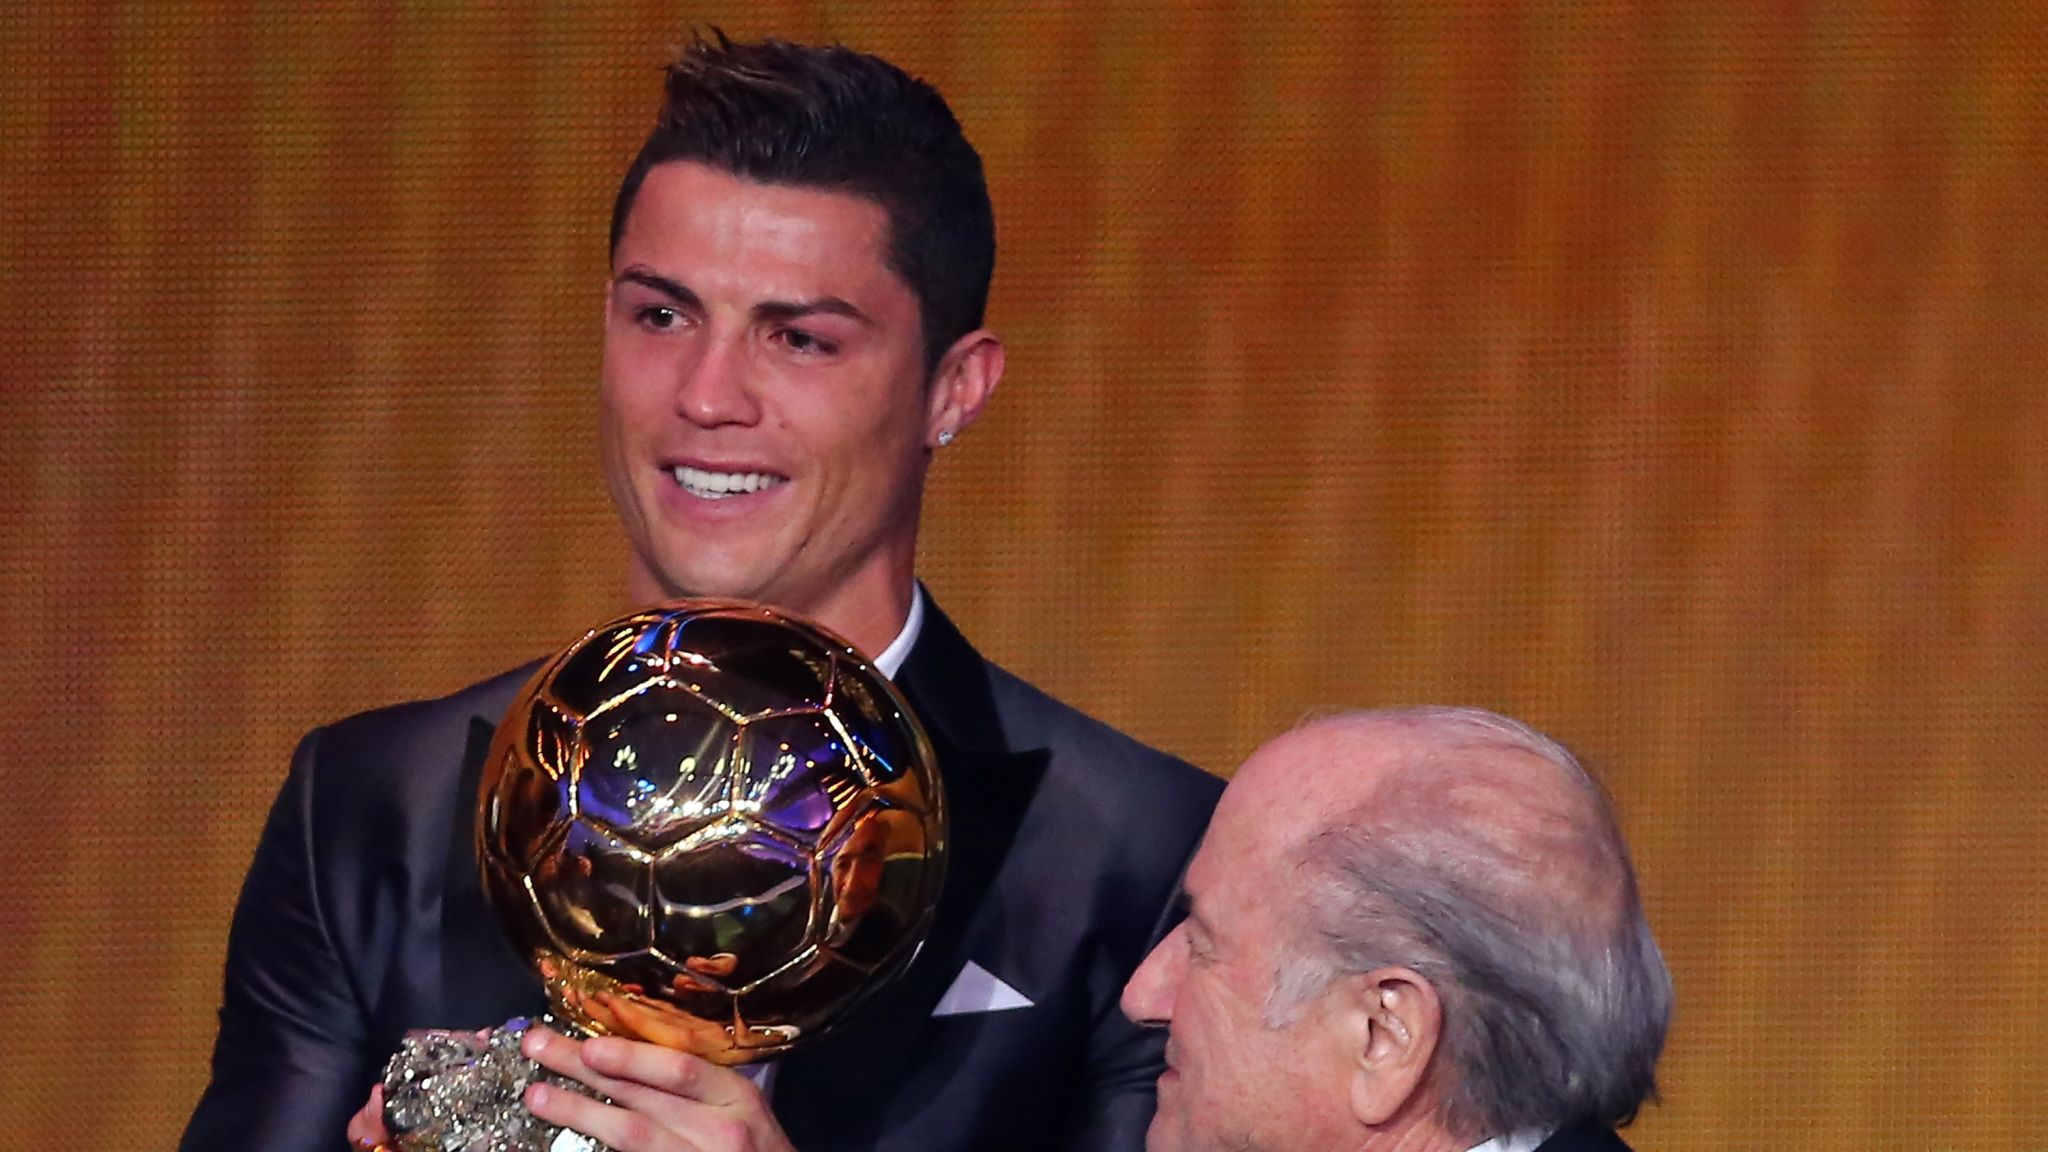 The FIFA Ballon d'Or 2014 candidates: Cristiano Ronaldo, Messi and Neuer